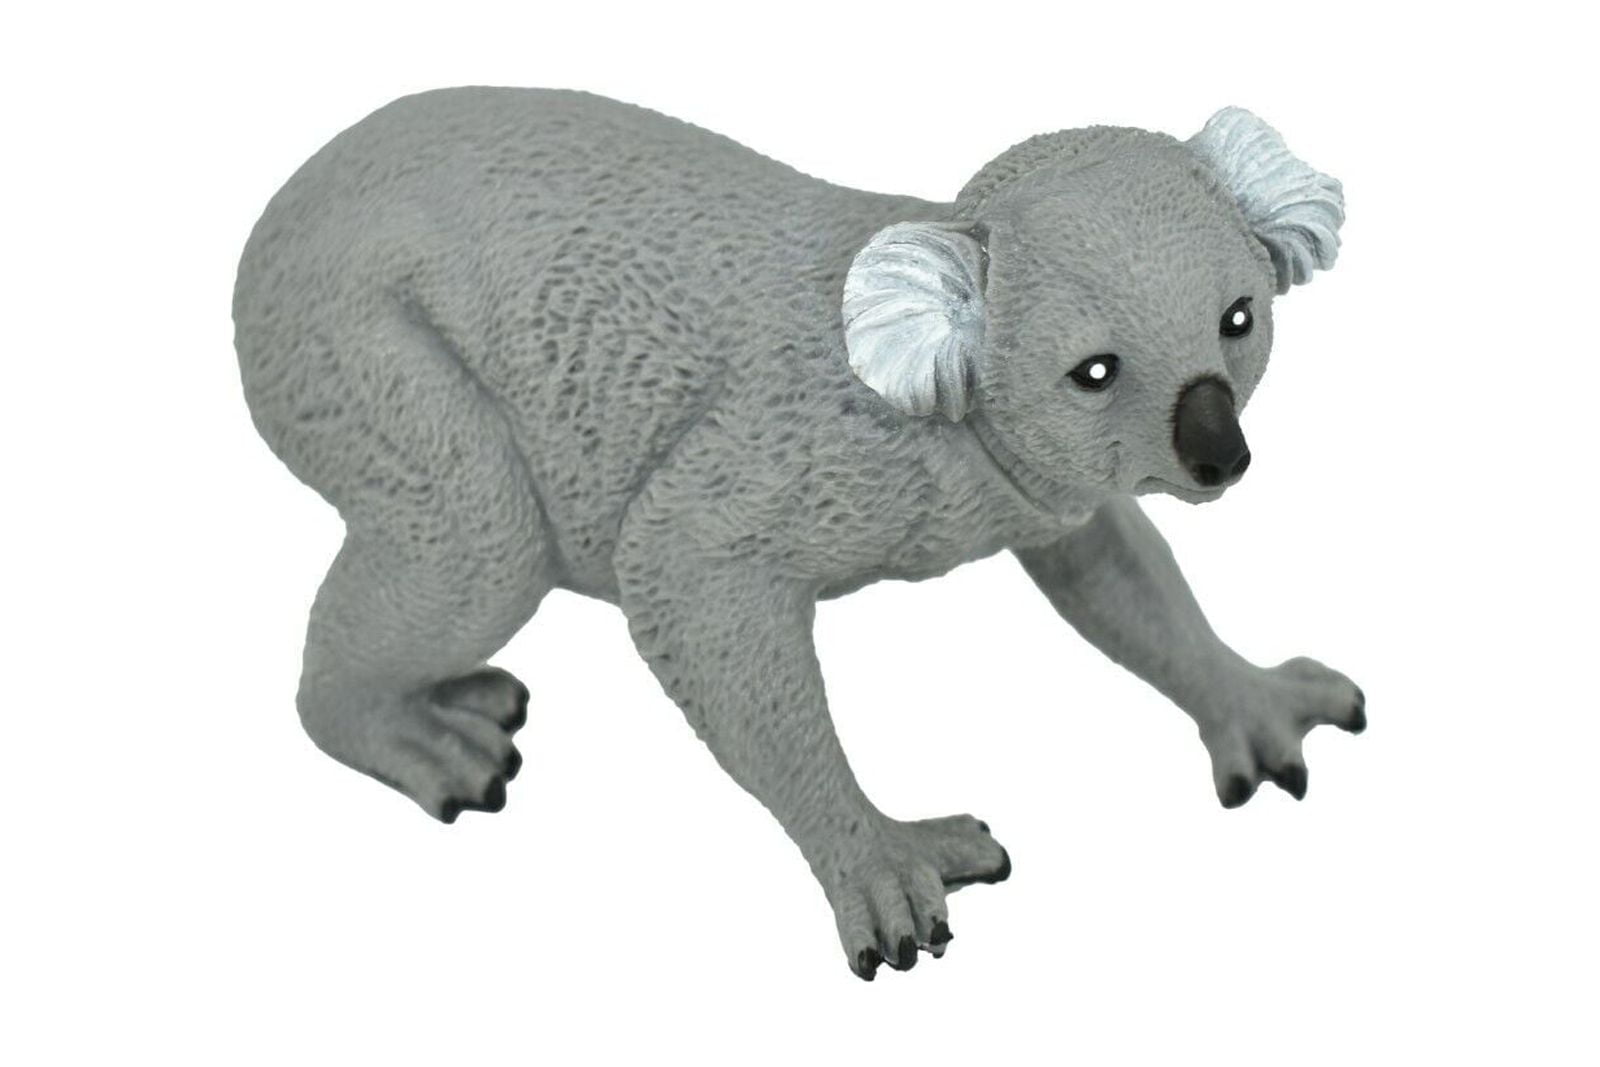 Koala Bear, Plastic Replica 3 3/4 inches long - F4343 B12 (1 PACK